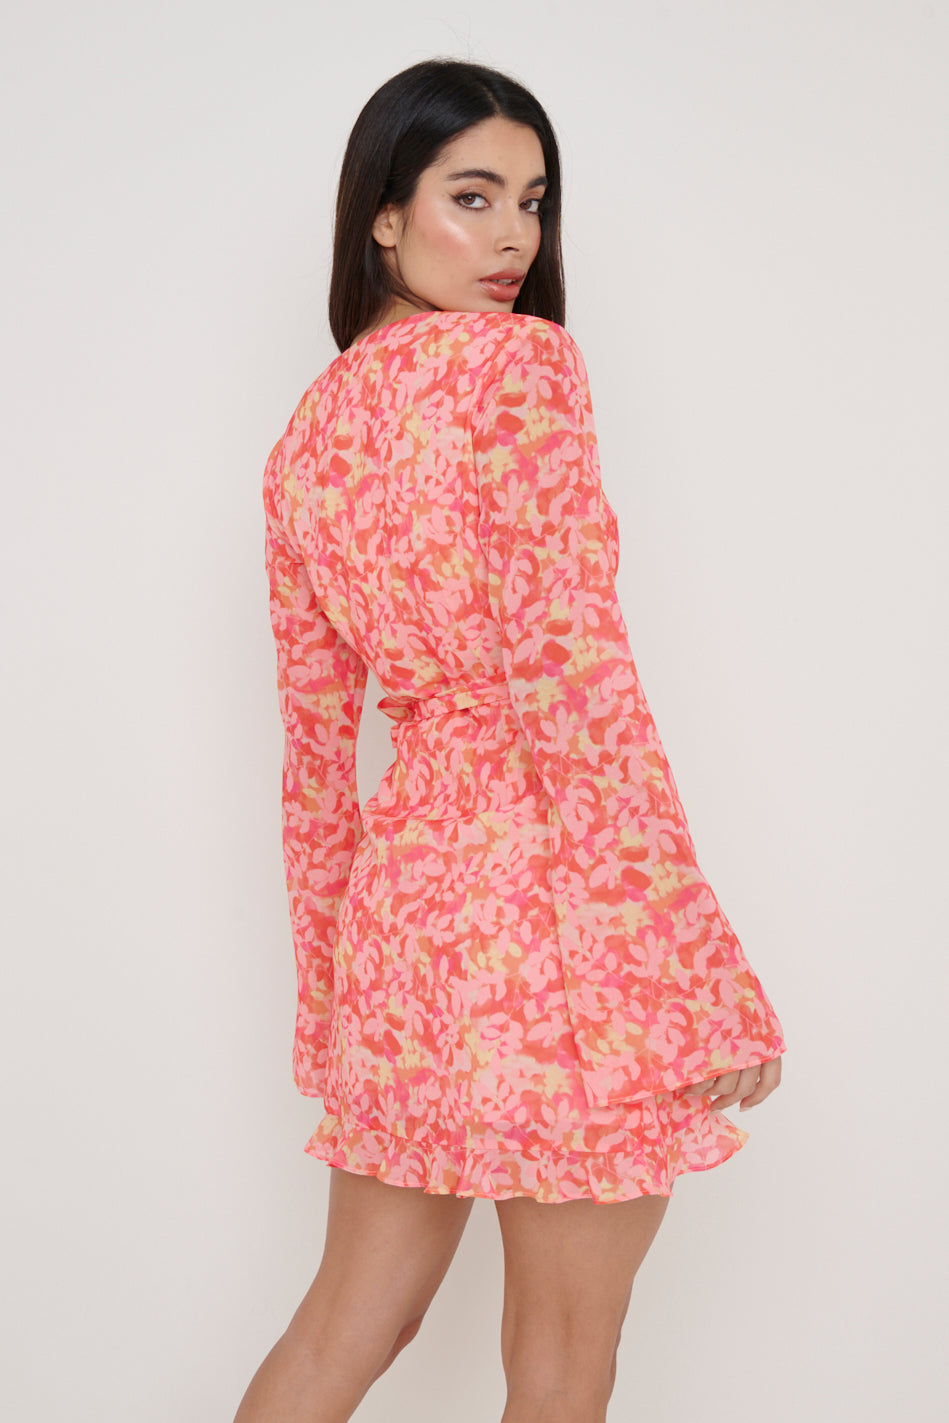 Jessica V-neck Wrap Mini Dress Orange and Pink Floral